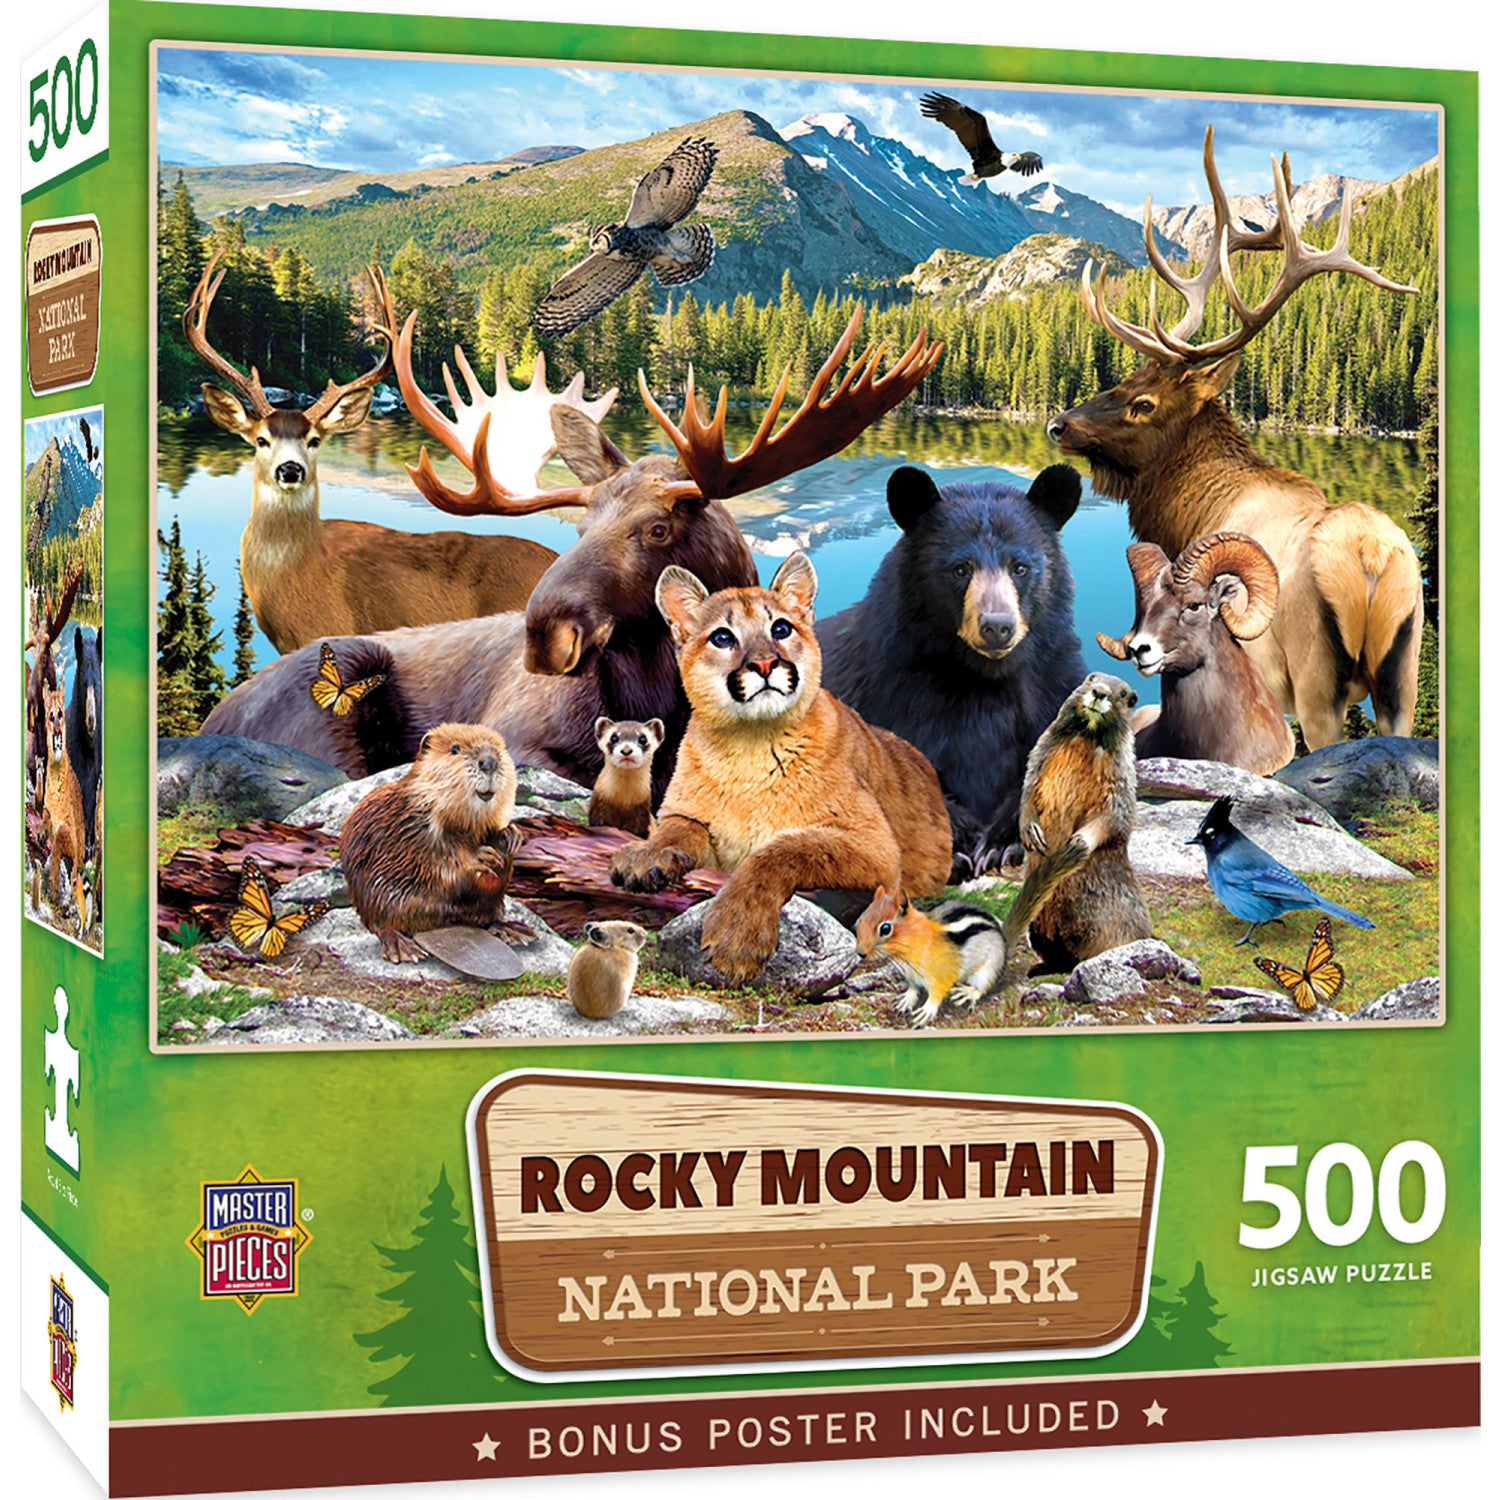 Rocky Mountain National Park 500 Piece Jigsaw Puzzle